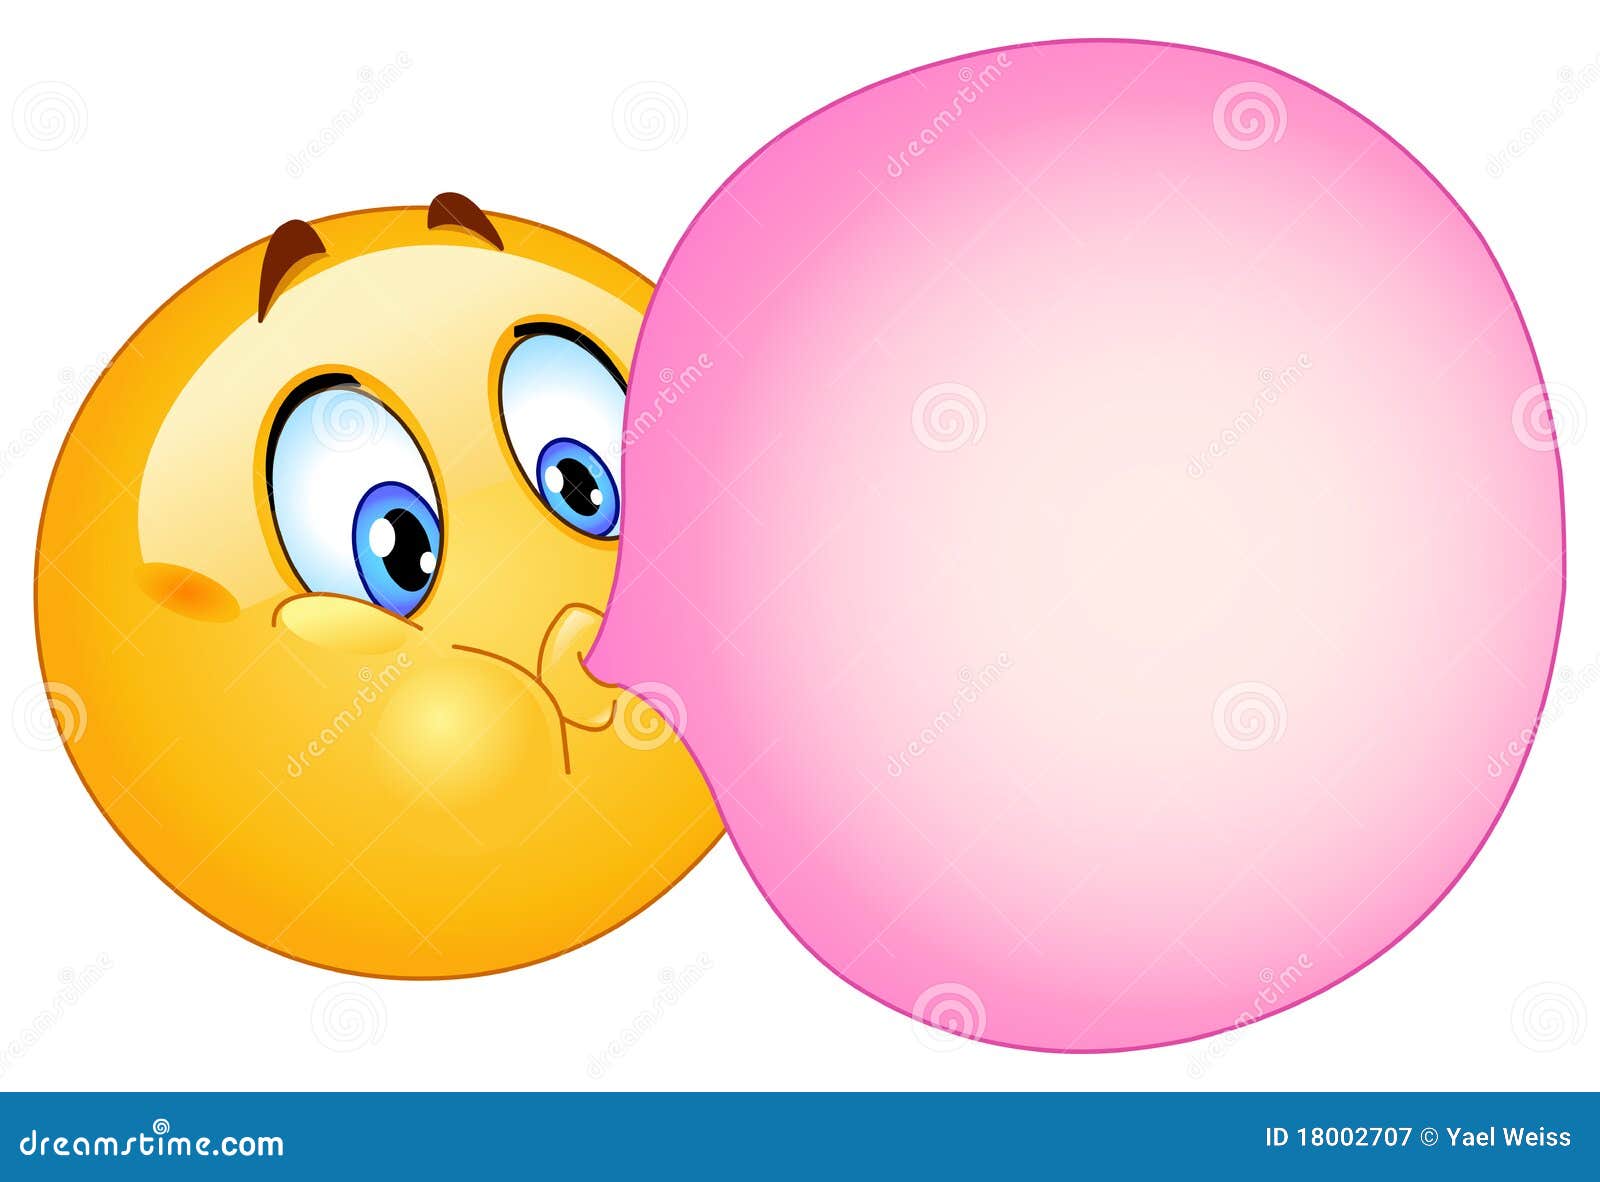 bubble gum emoticon